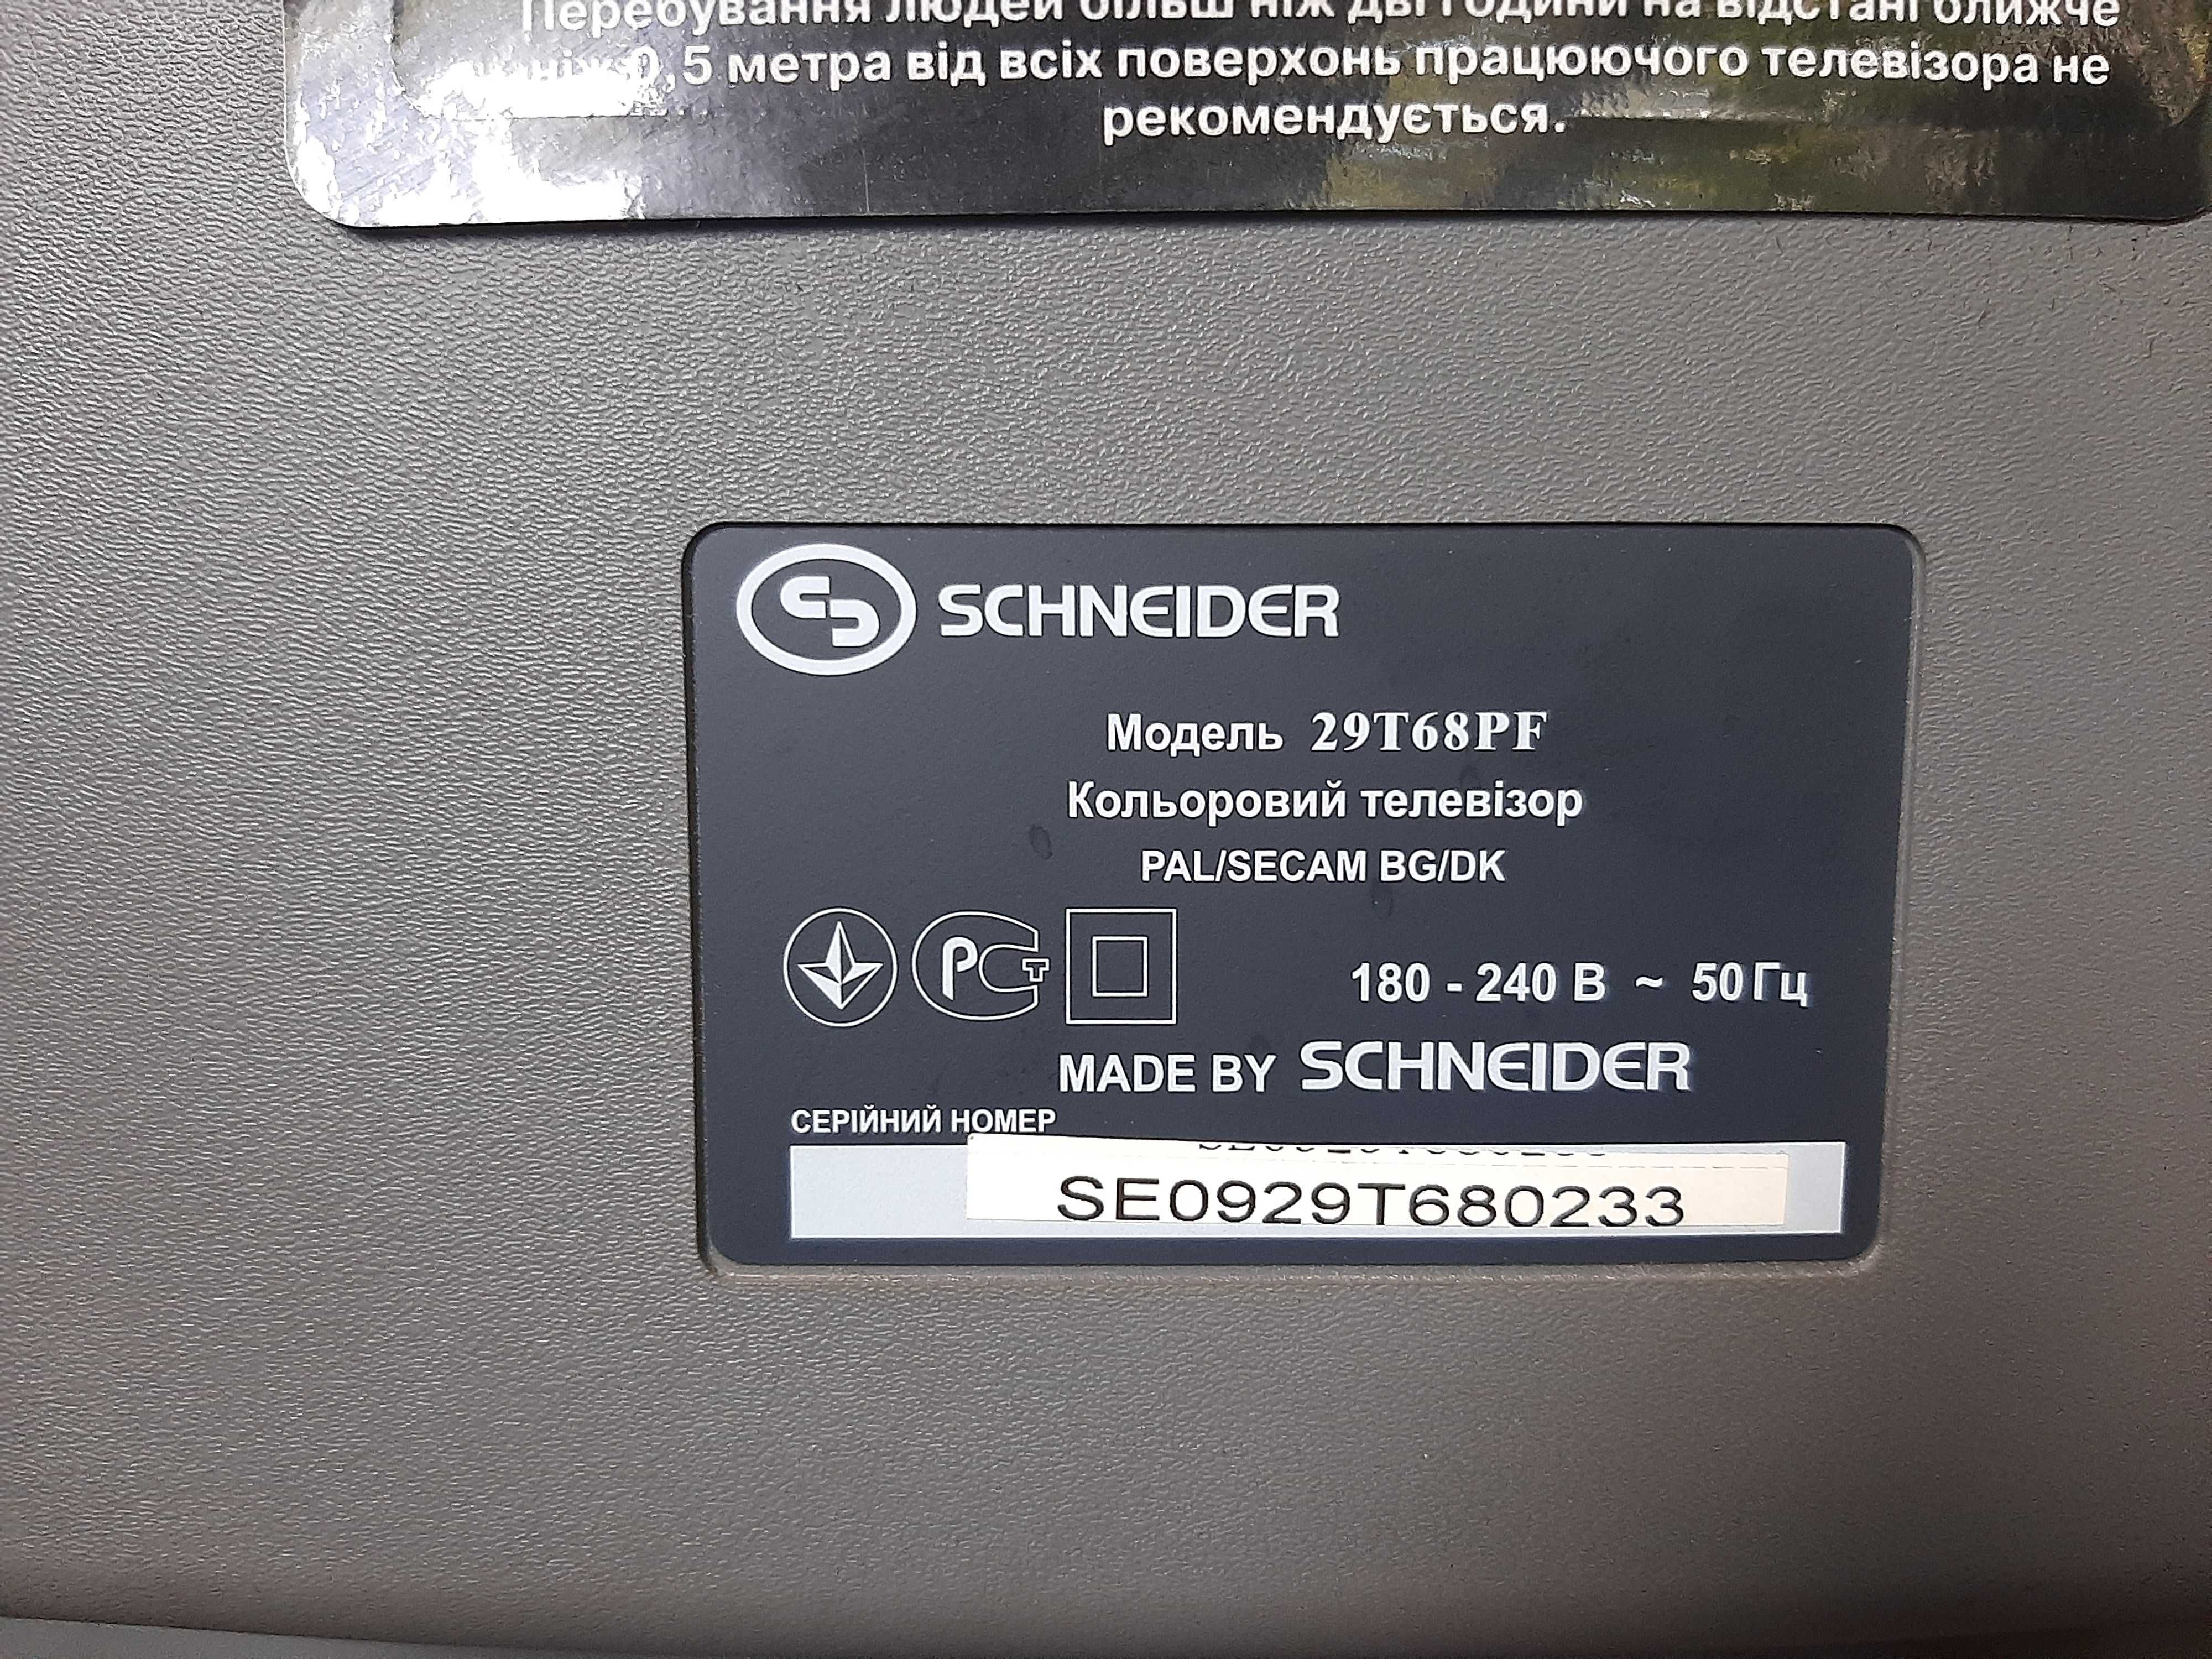 Большой Немецкий Телевизор
Schneider 74 см "29". Модель: 29T68PF.